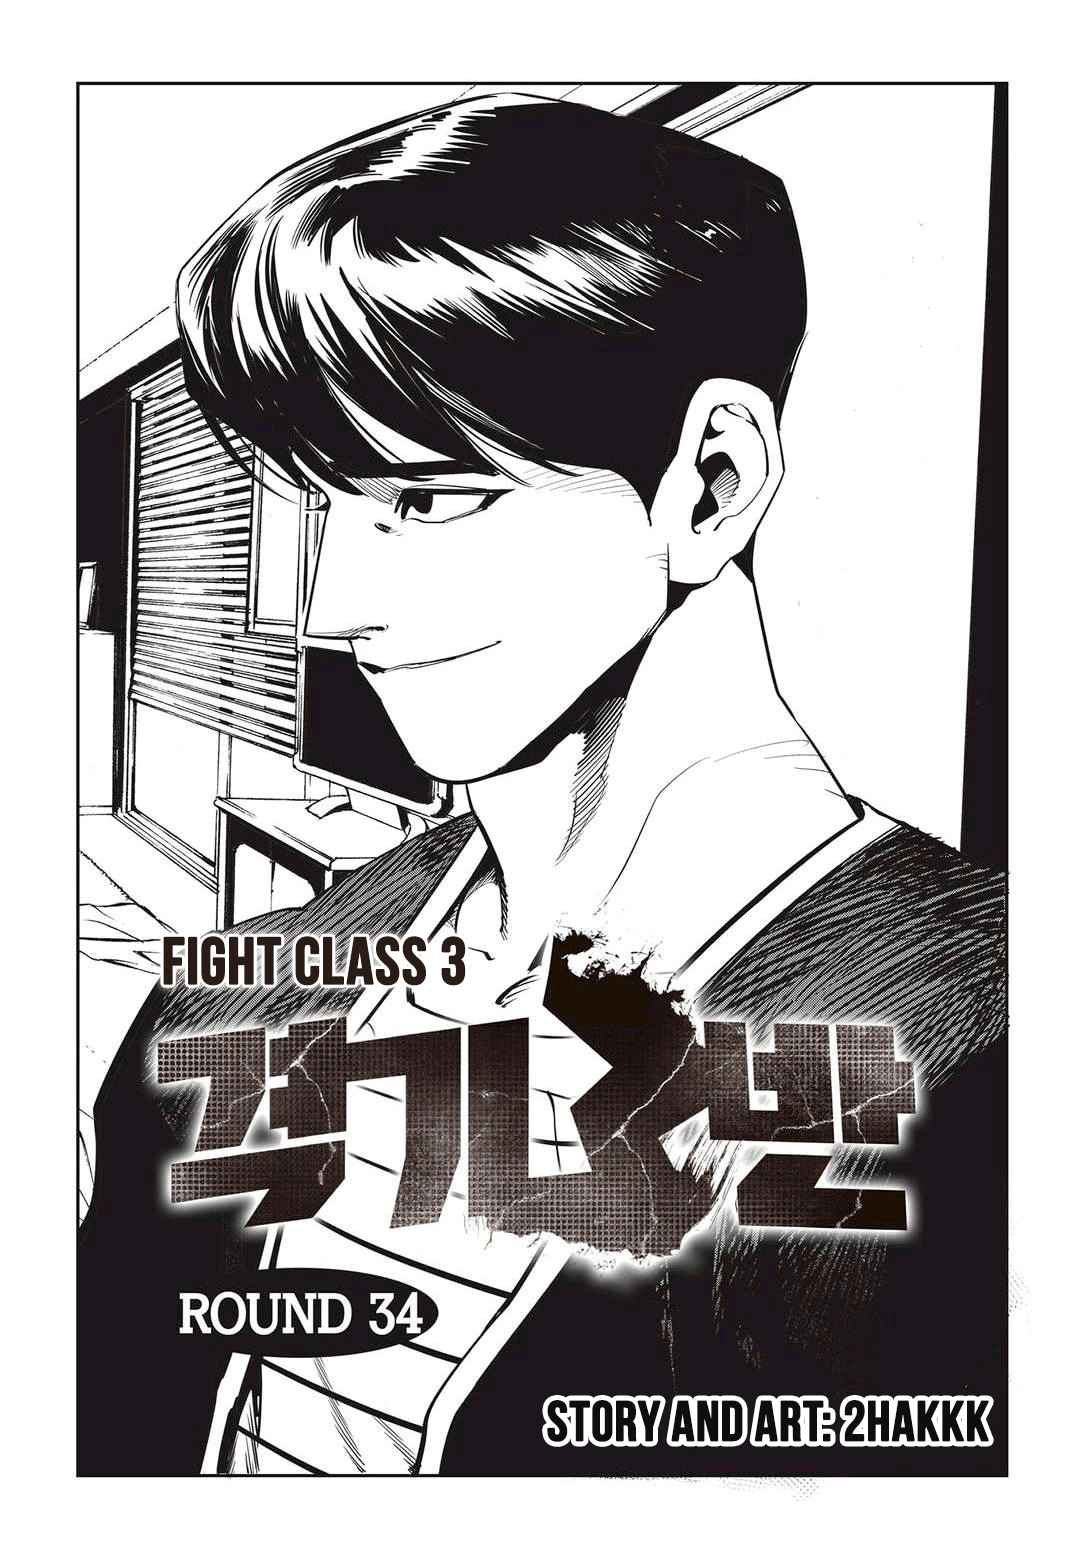 Fight Class 3 Vol. 5 Ch. 34 Round 34